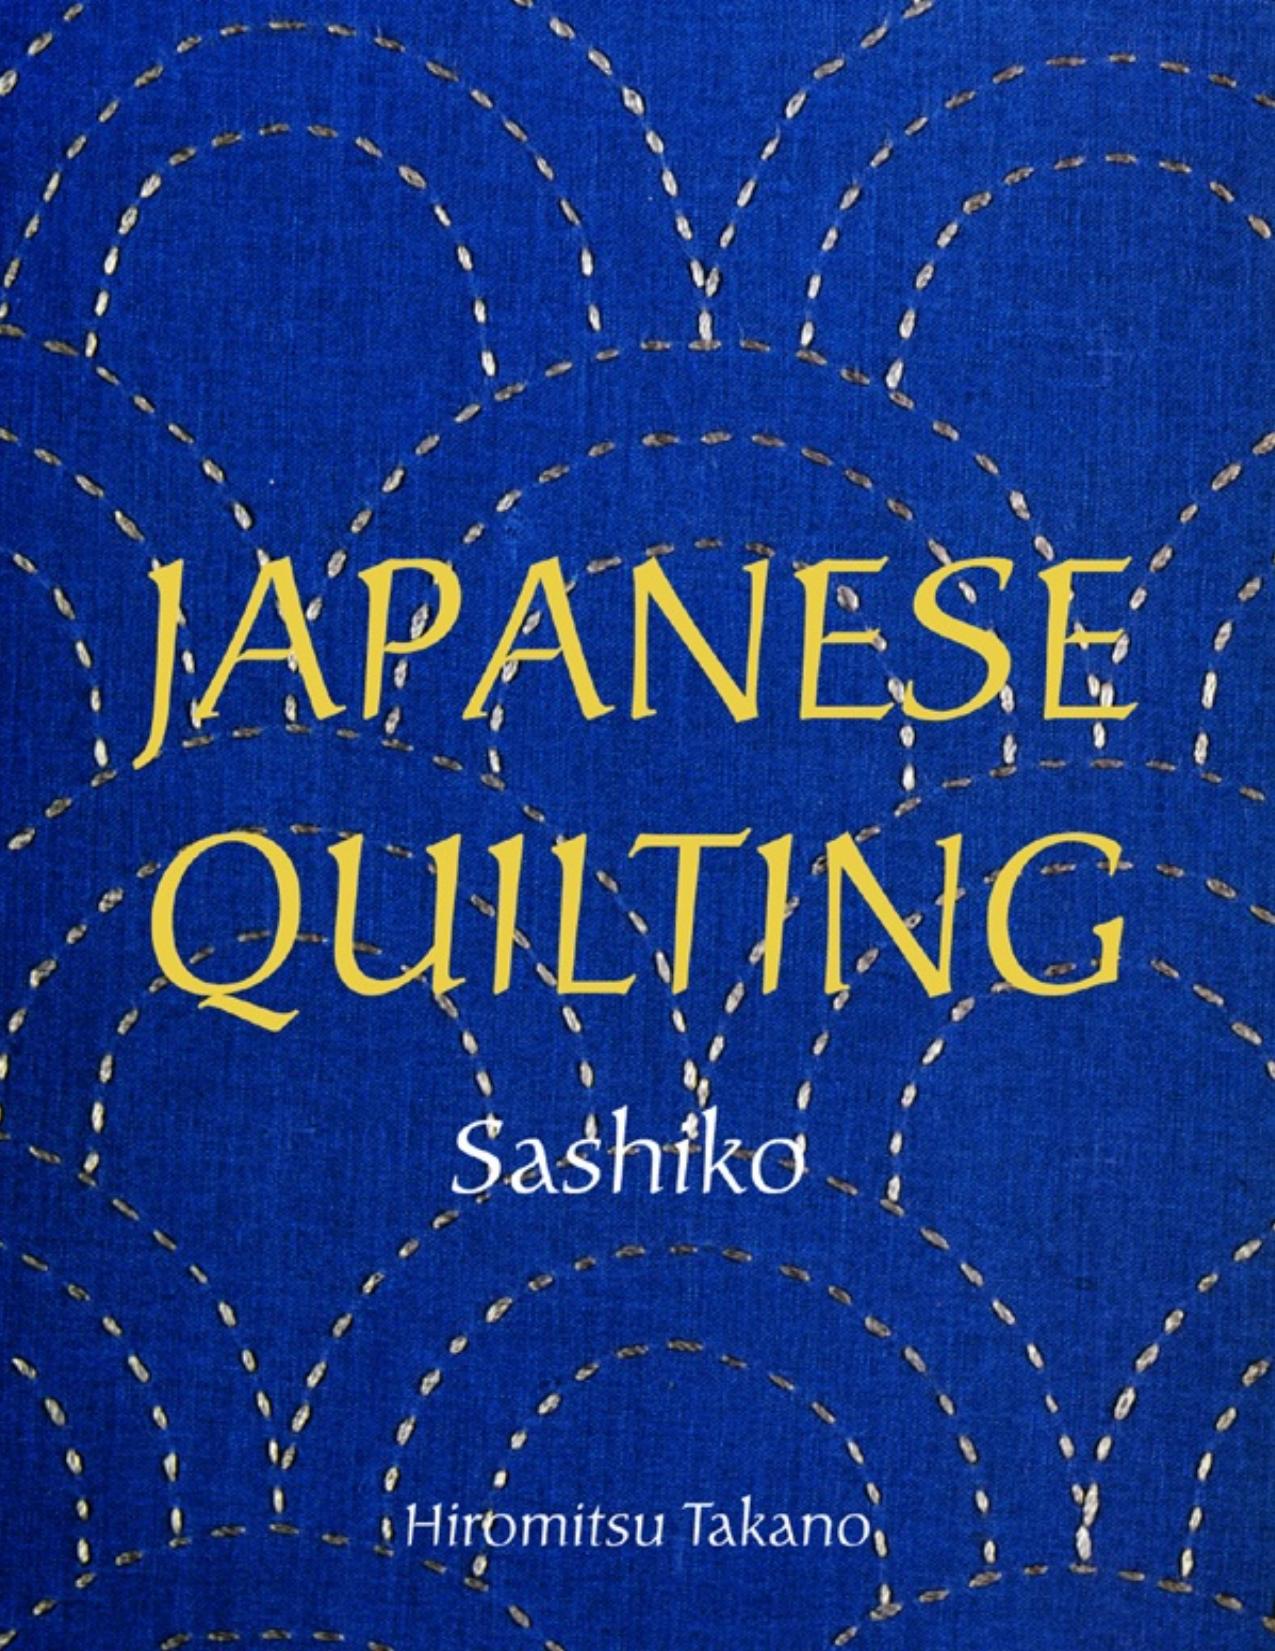 Japanese Quilting: Sashiko - PDFDrive.com